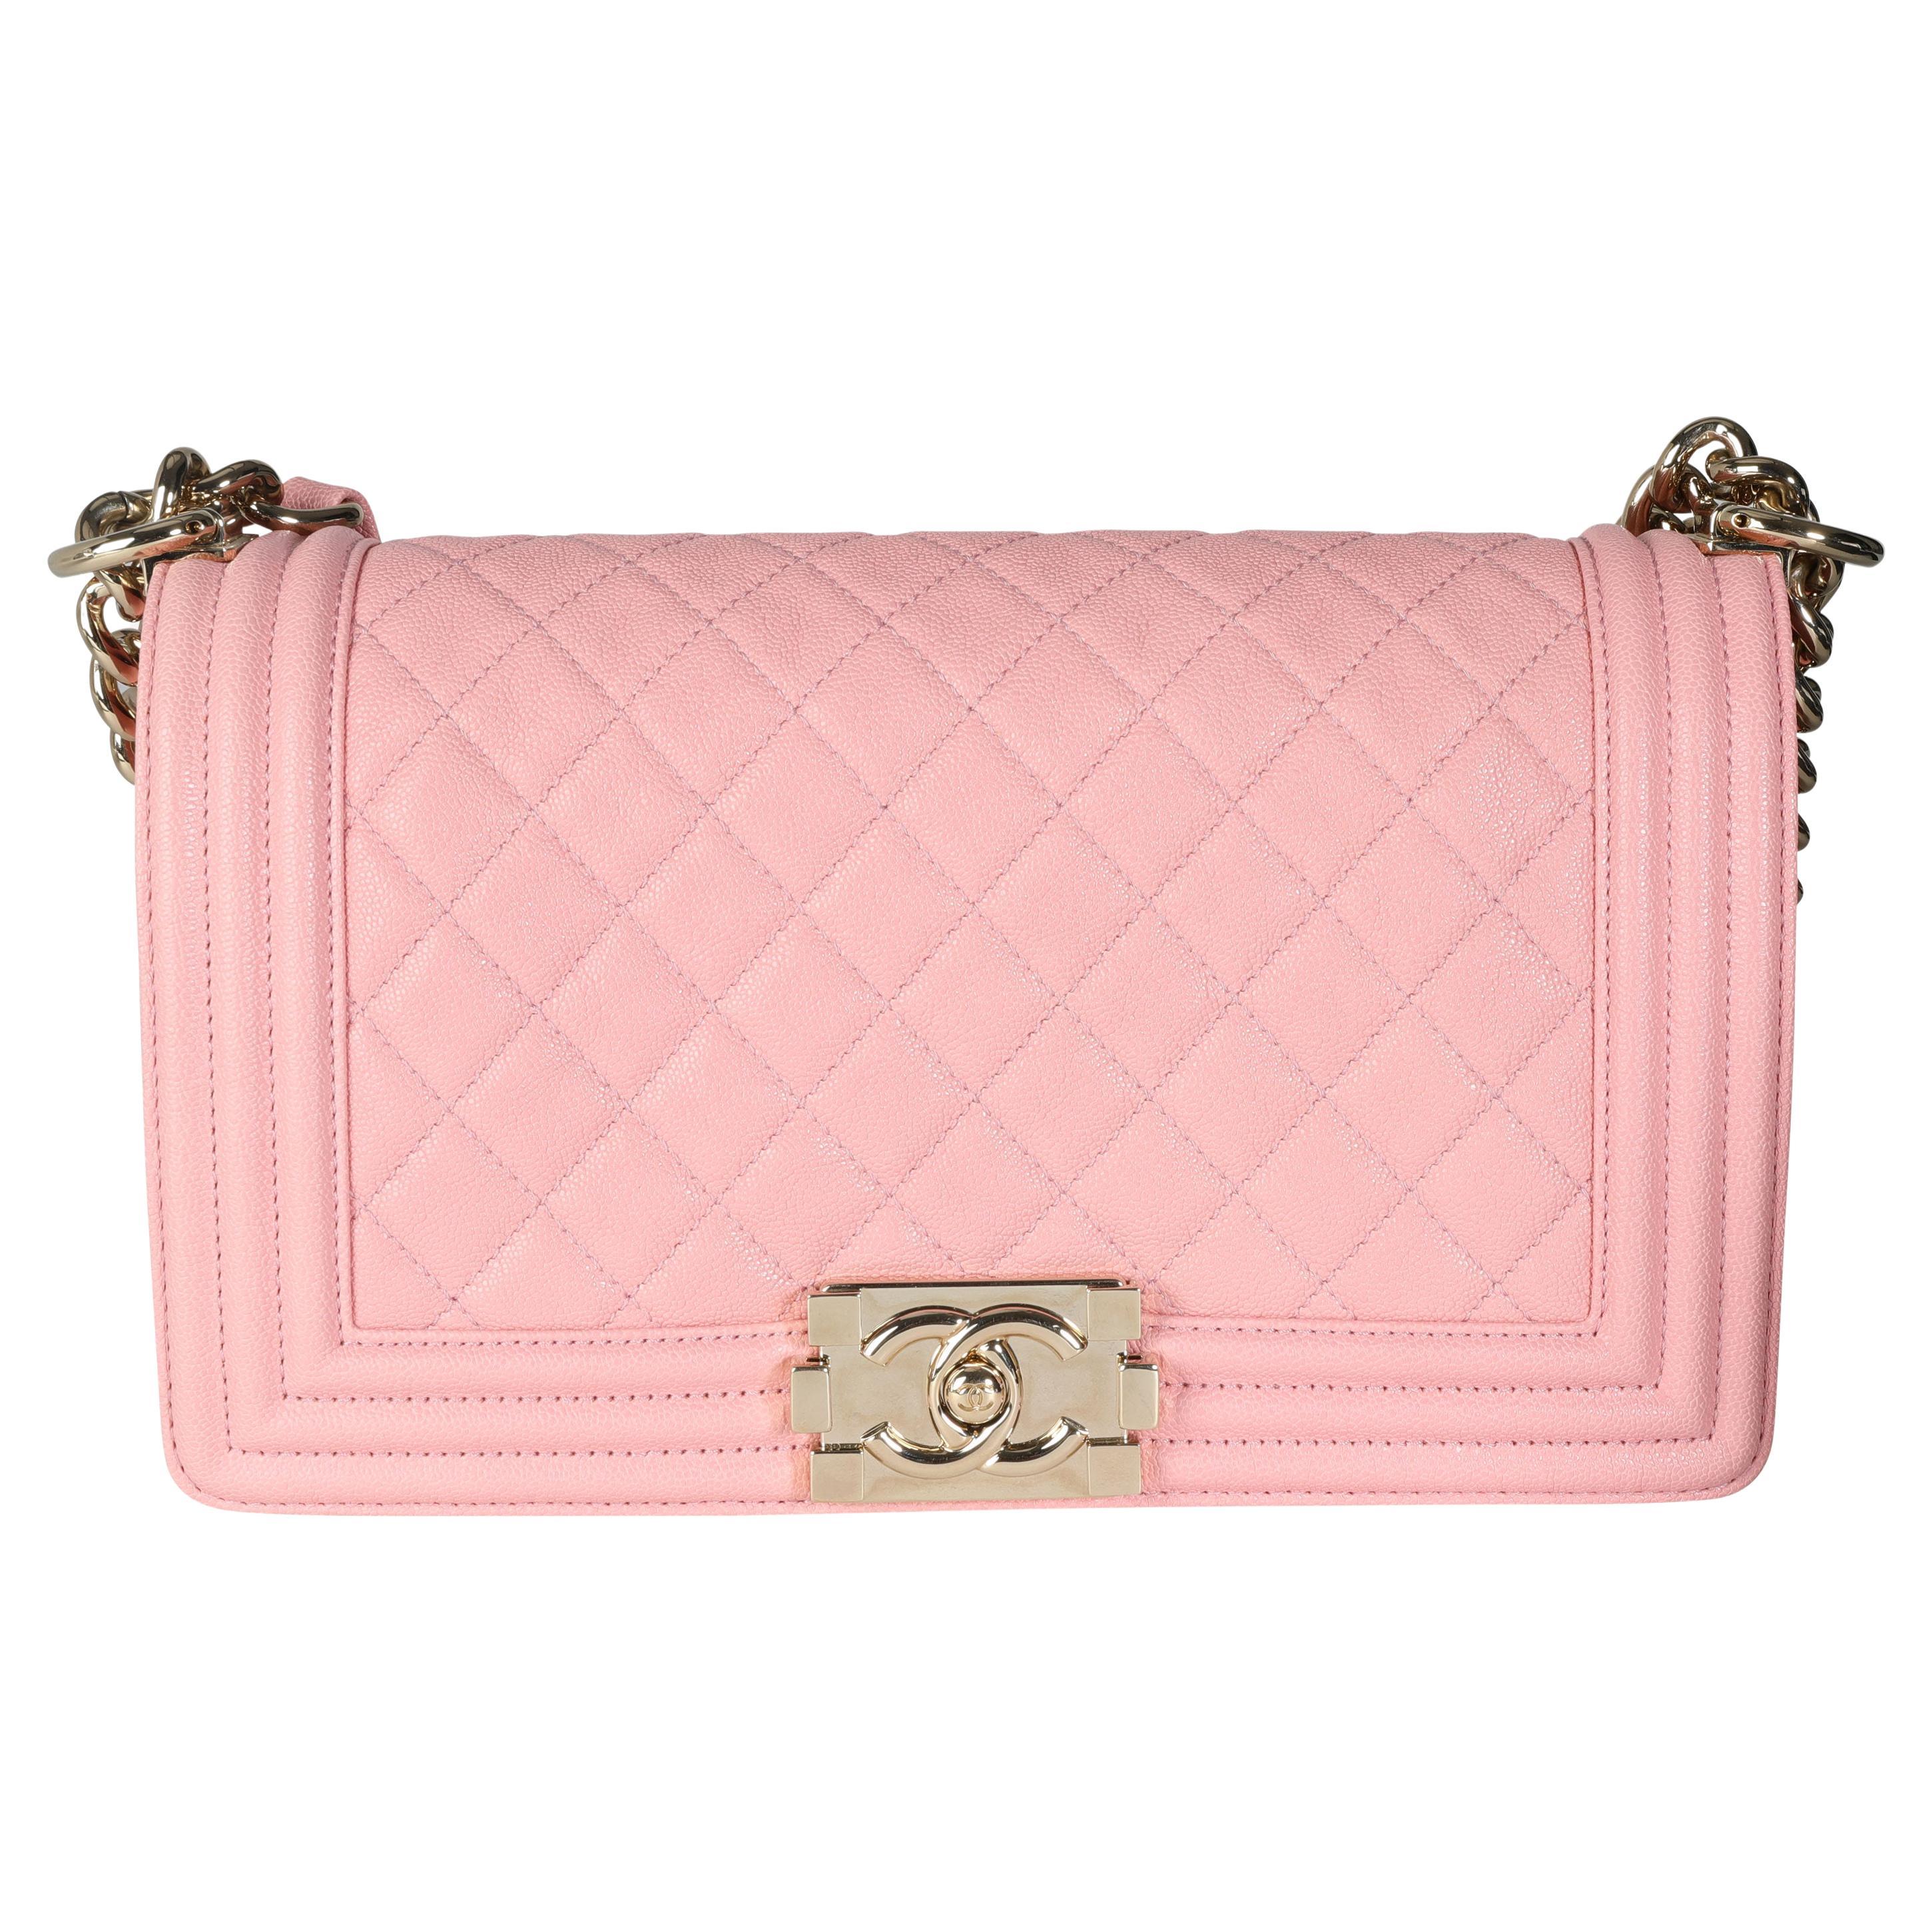 Chanel Pink Caviar Quilted Medium Boy Bag